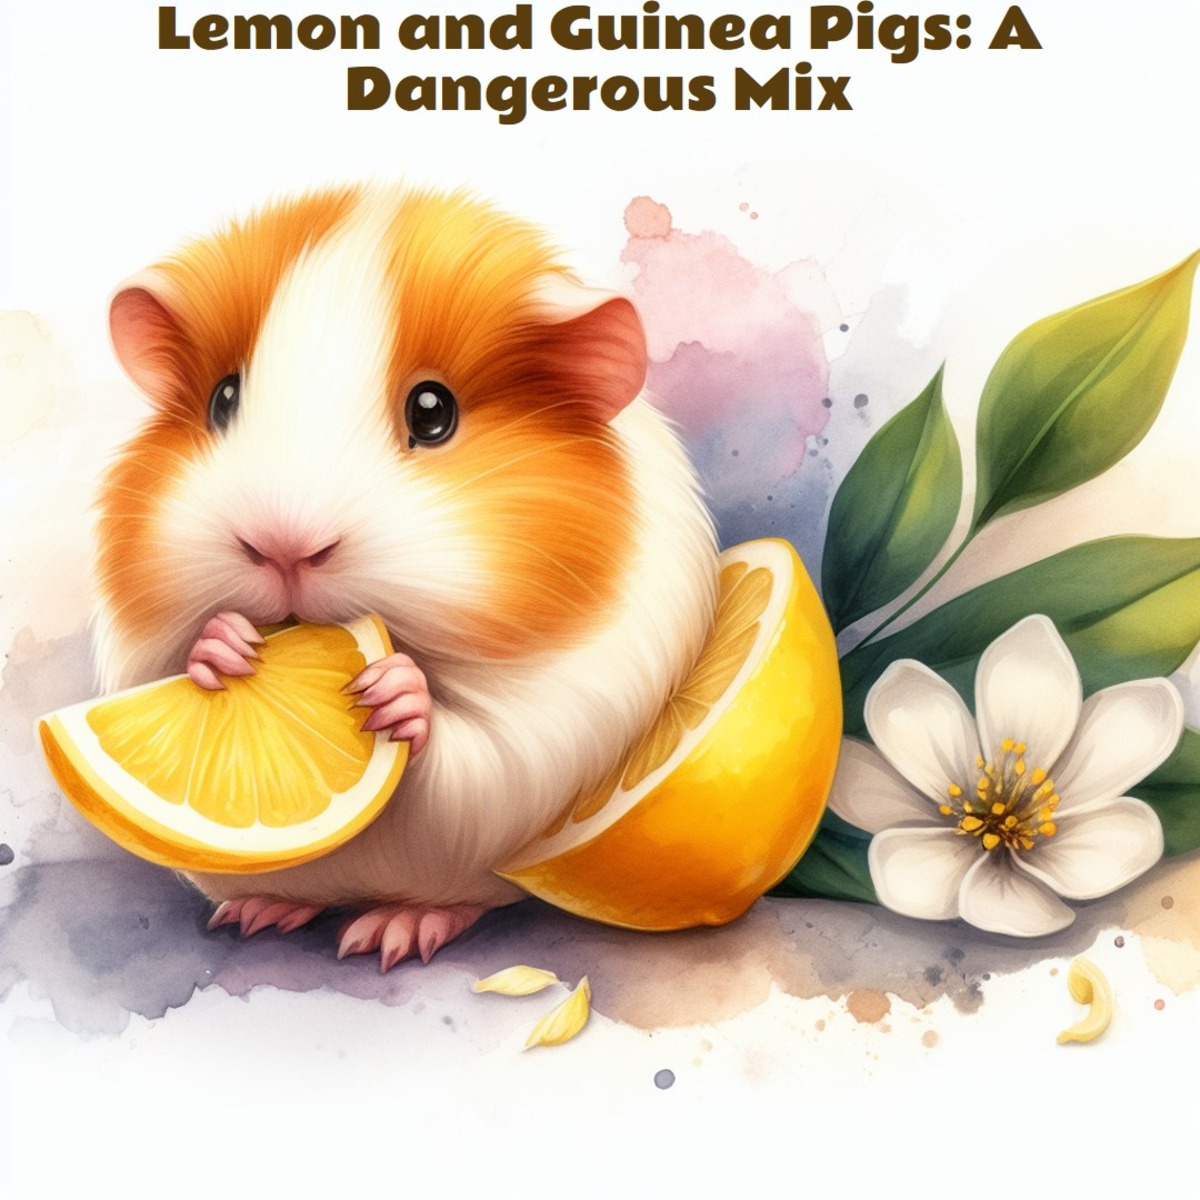 Can Guinea Pigs Have Lemon?